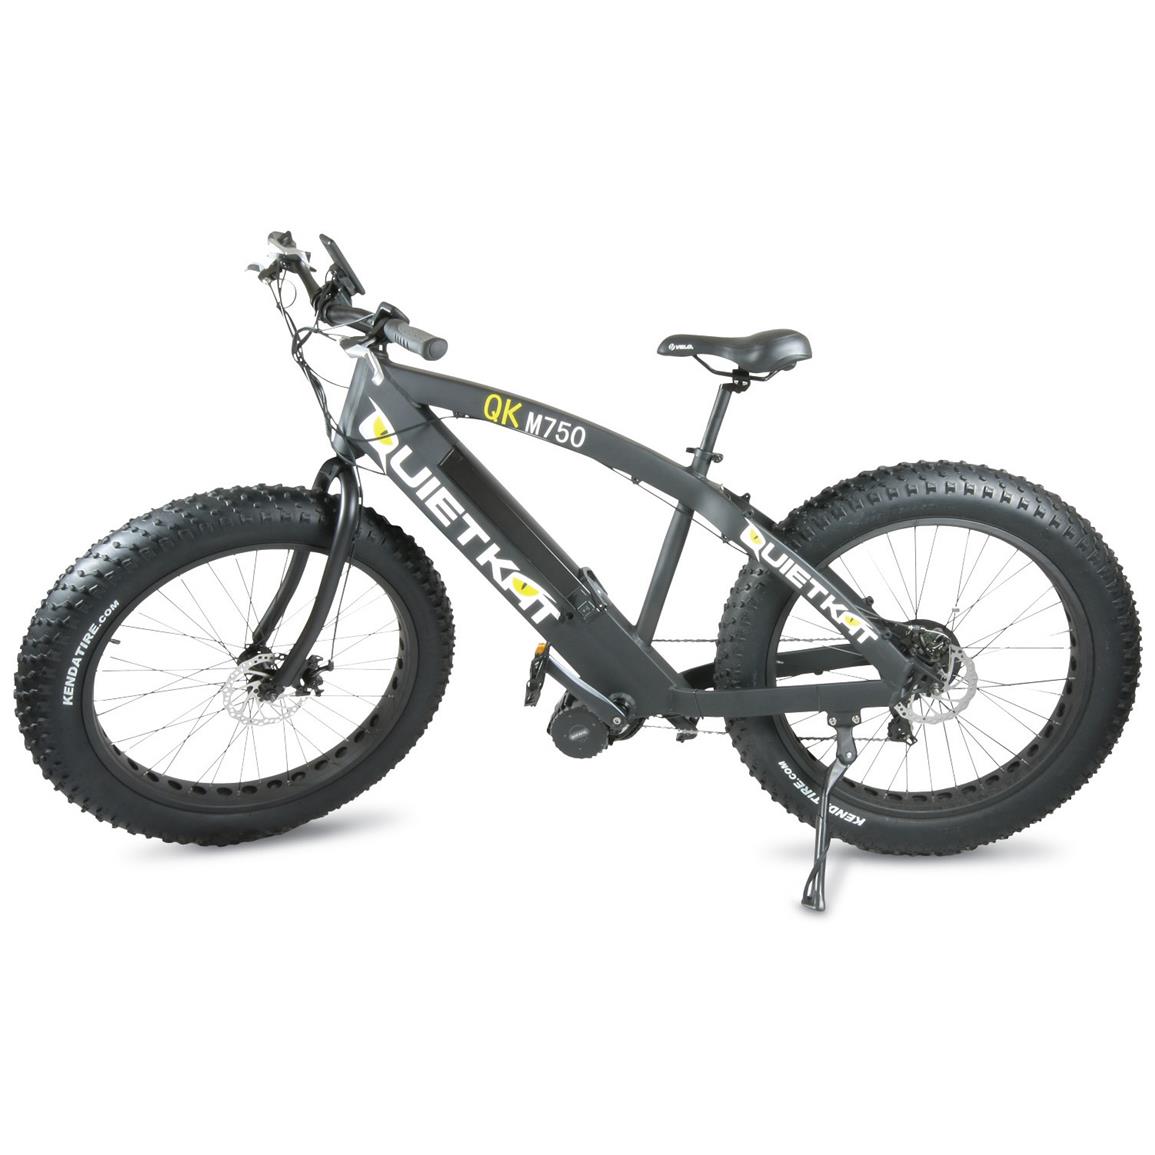 QuietKat FatKat Electric Mountain Bike, Black 670687, Electric UTV at